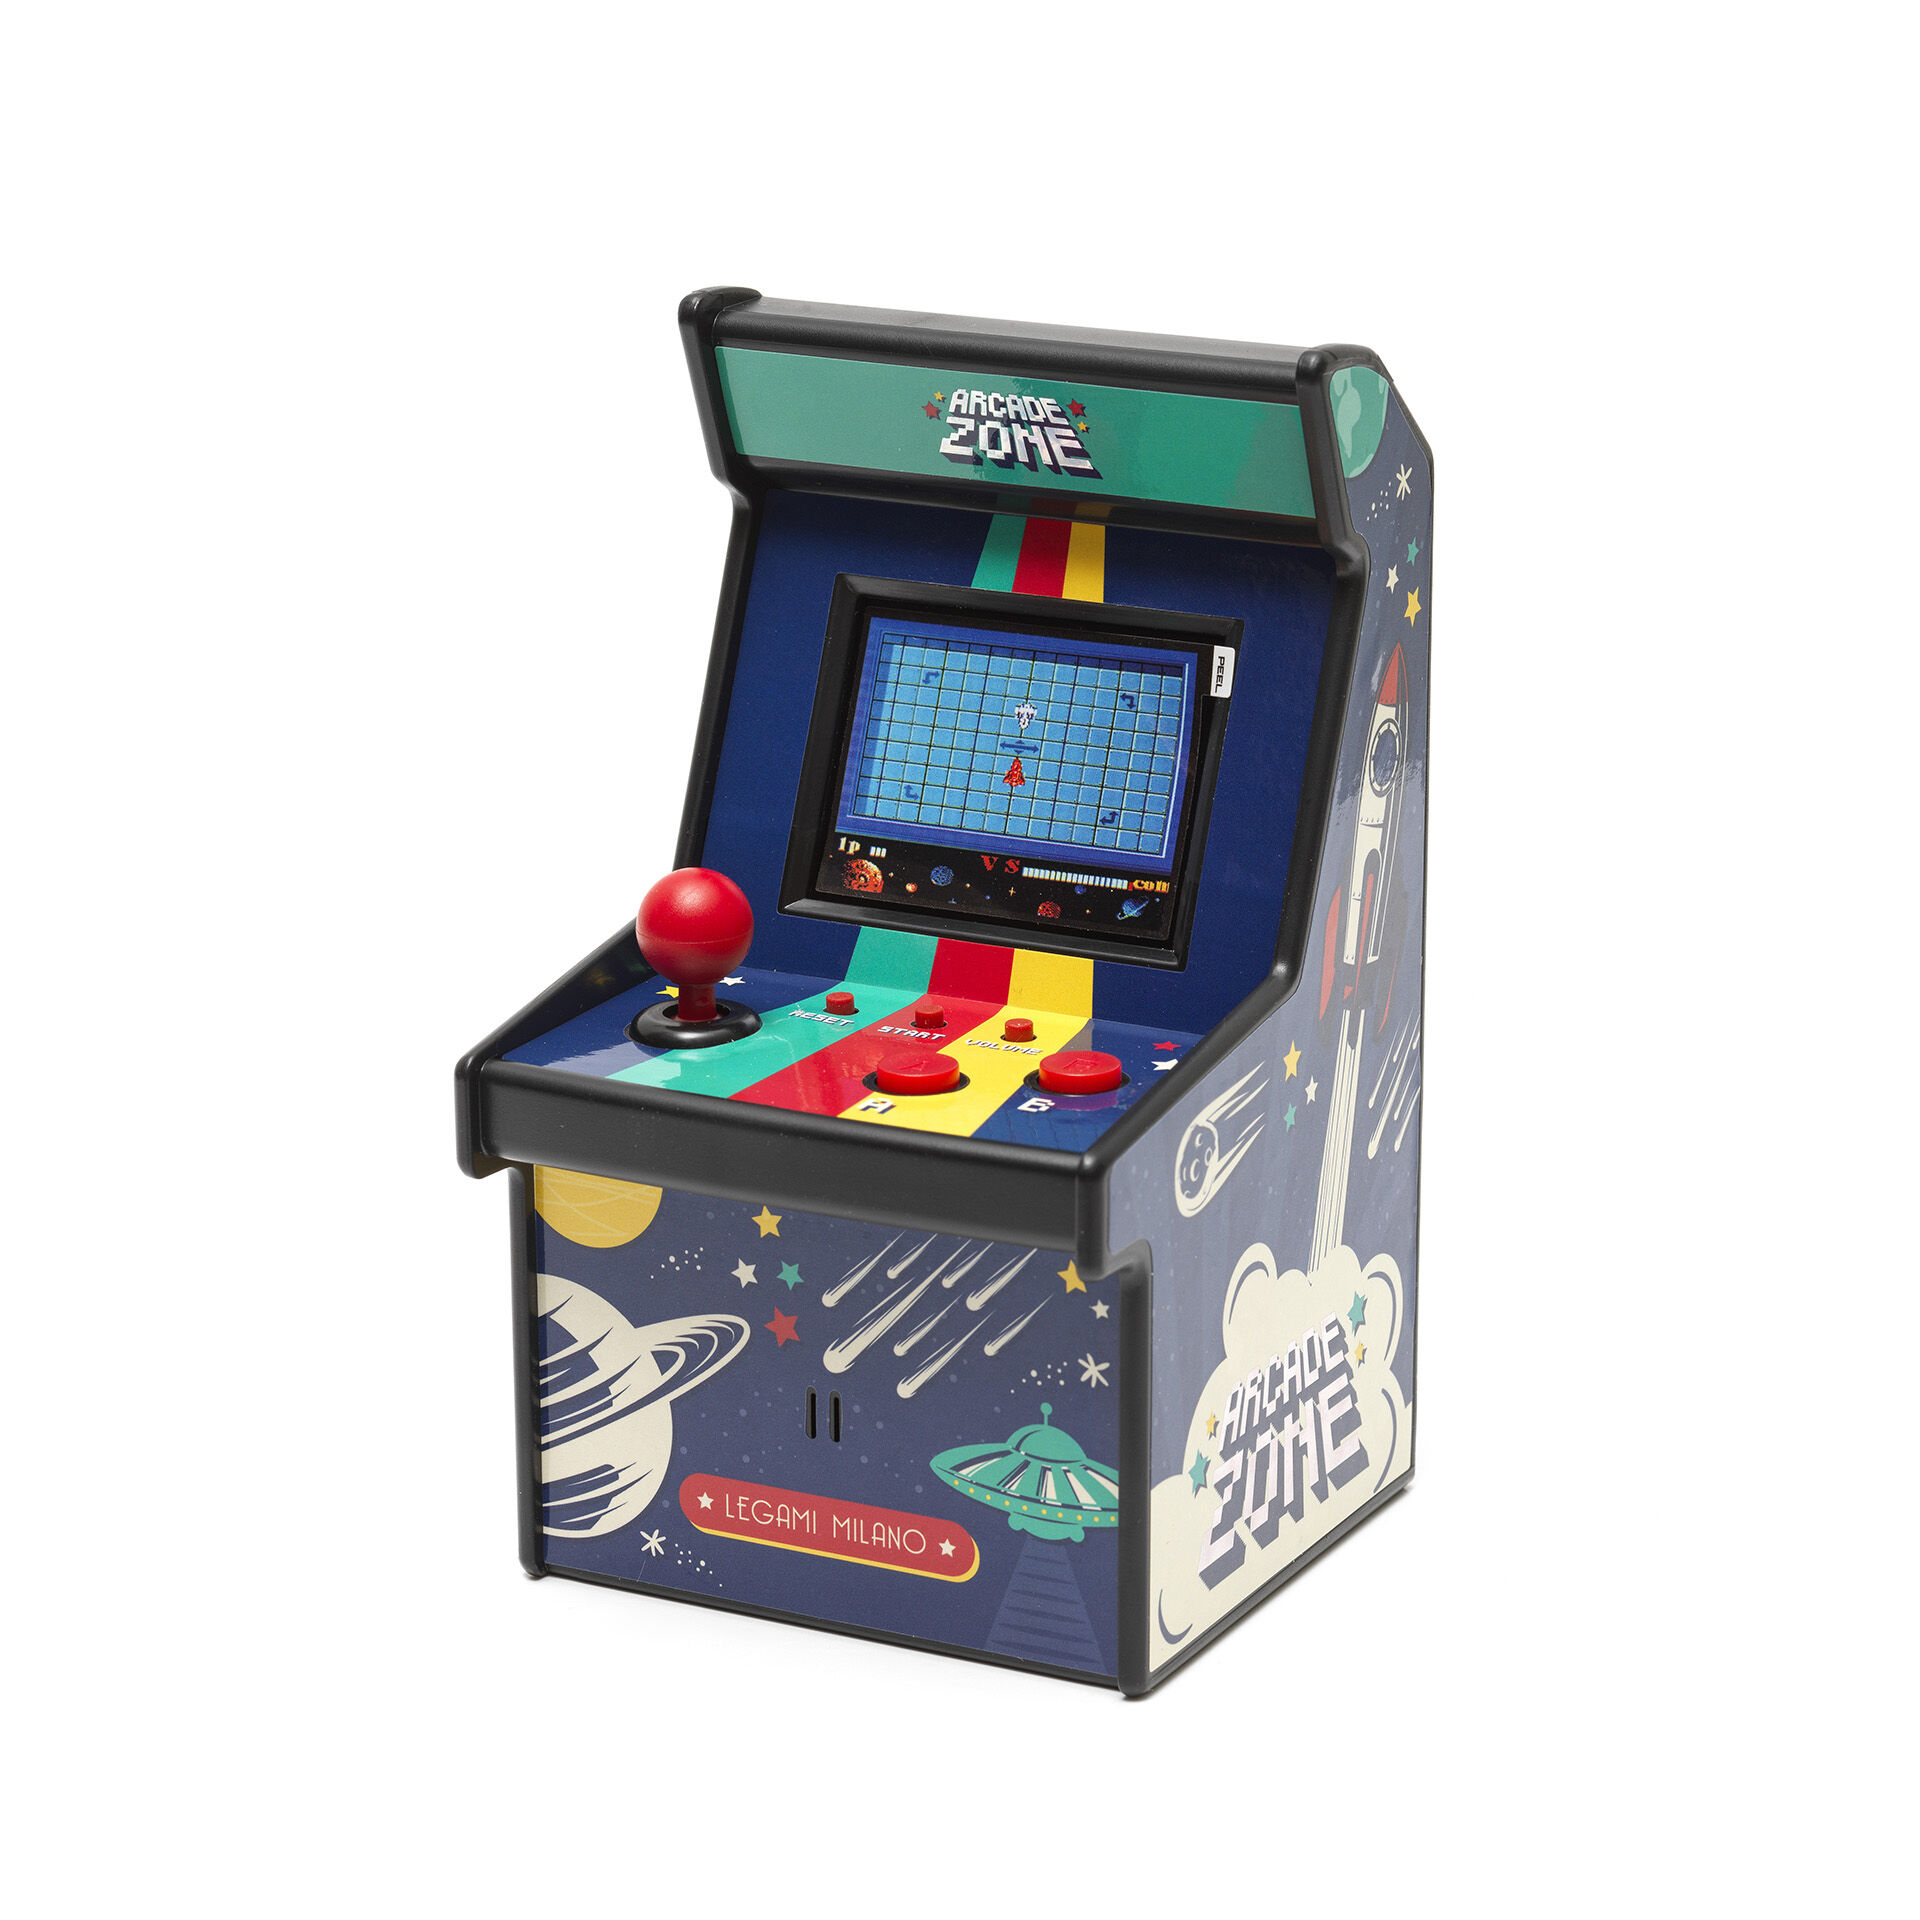 HHG0001 Legami Arcade Station-Mini Consola portátil 